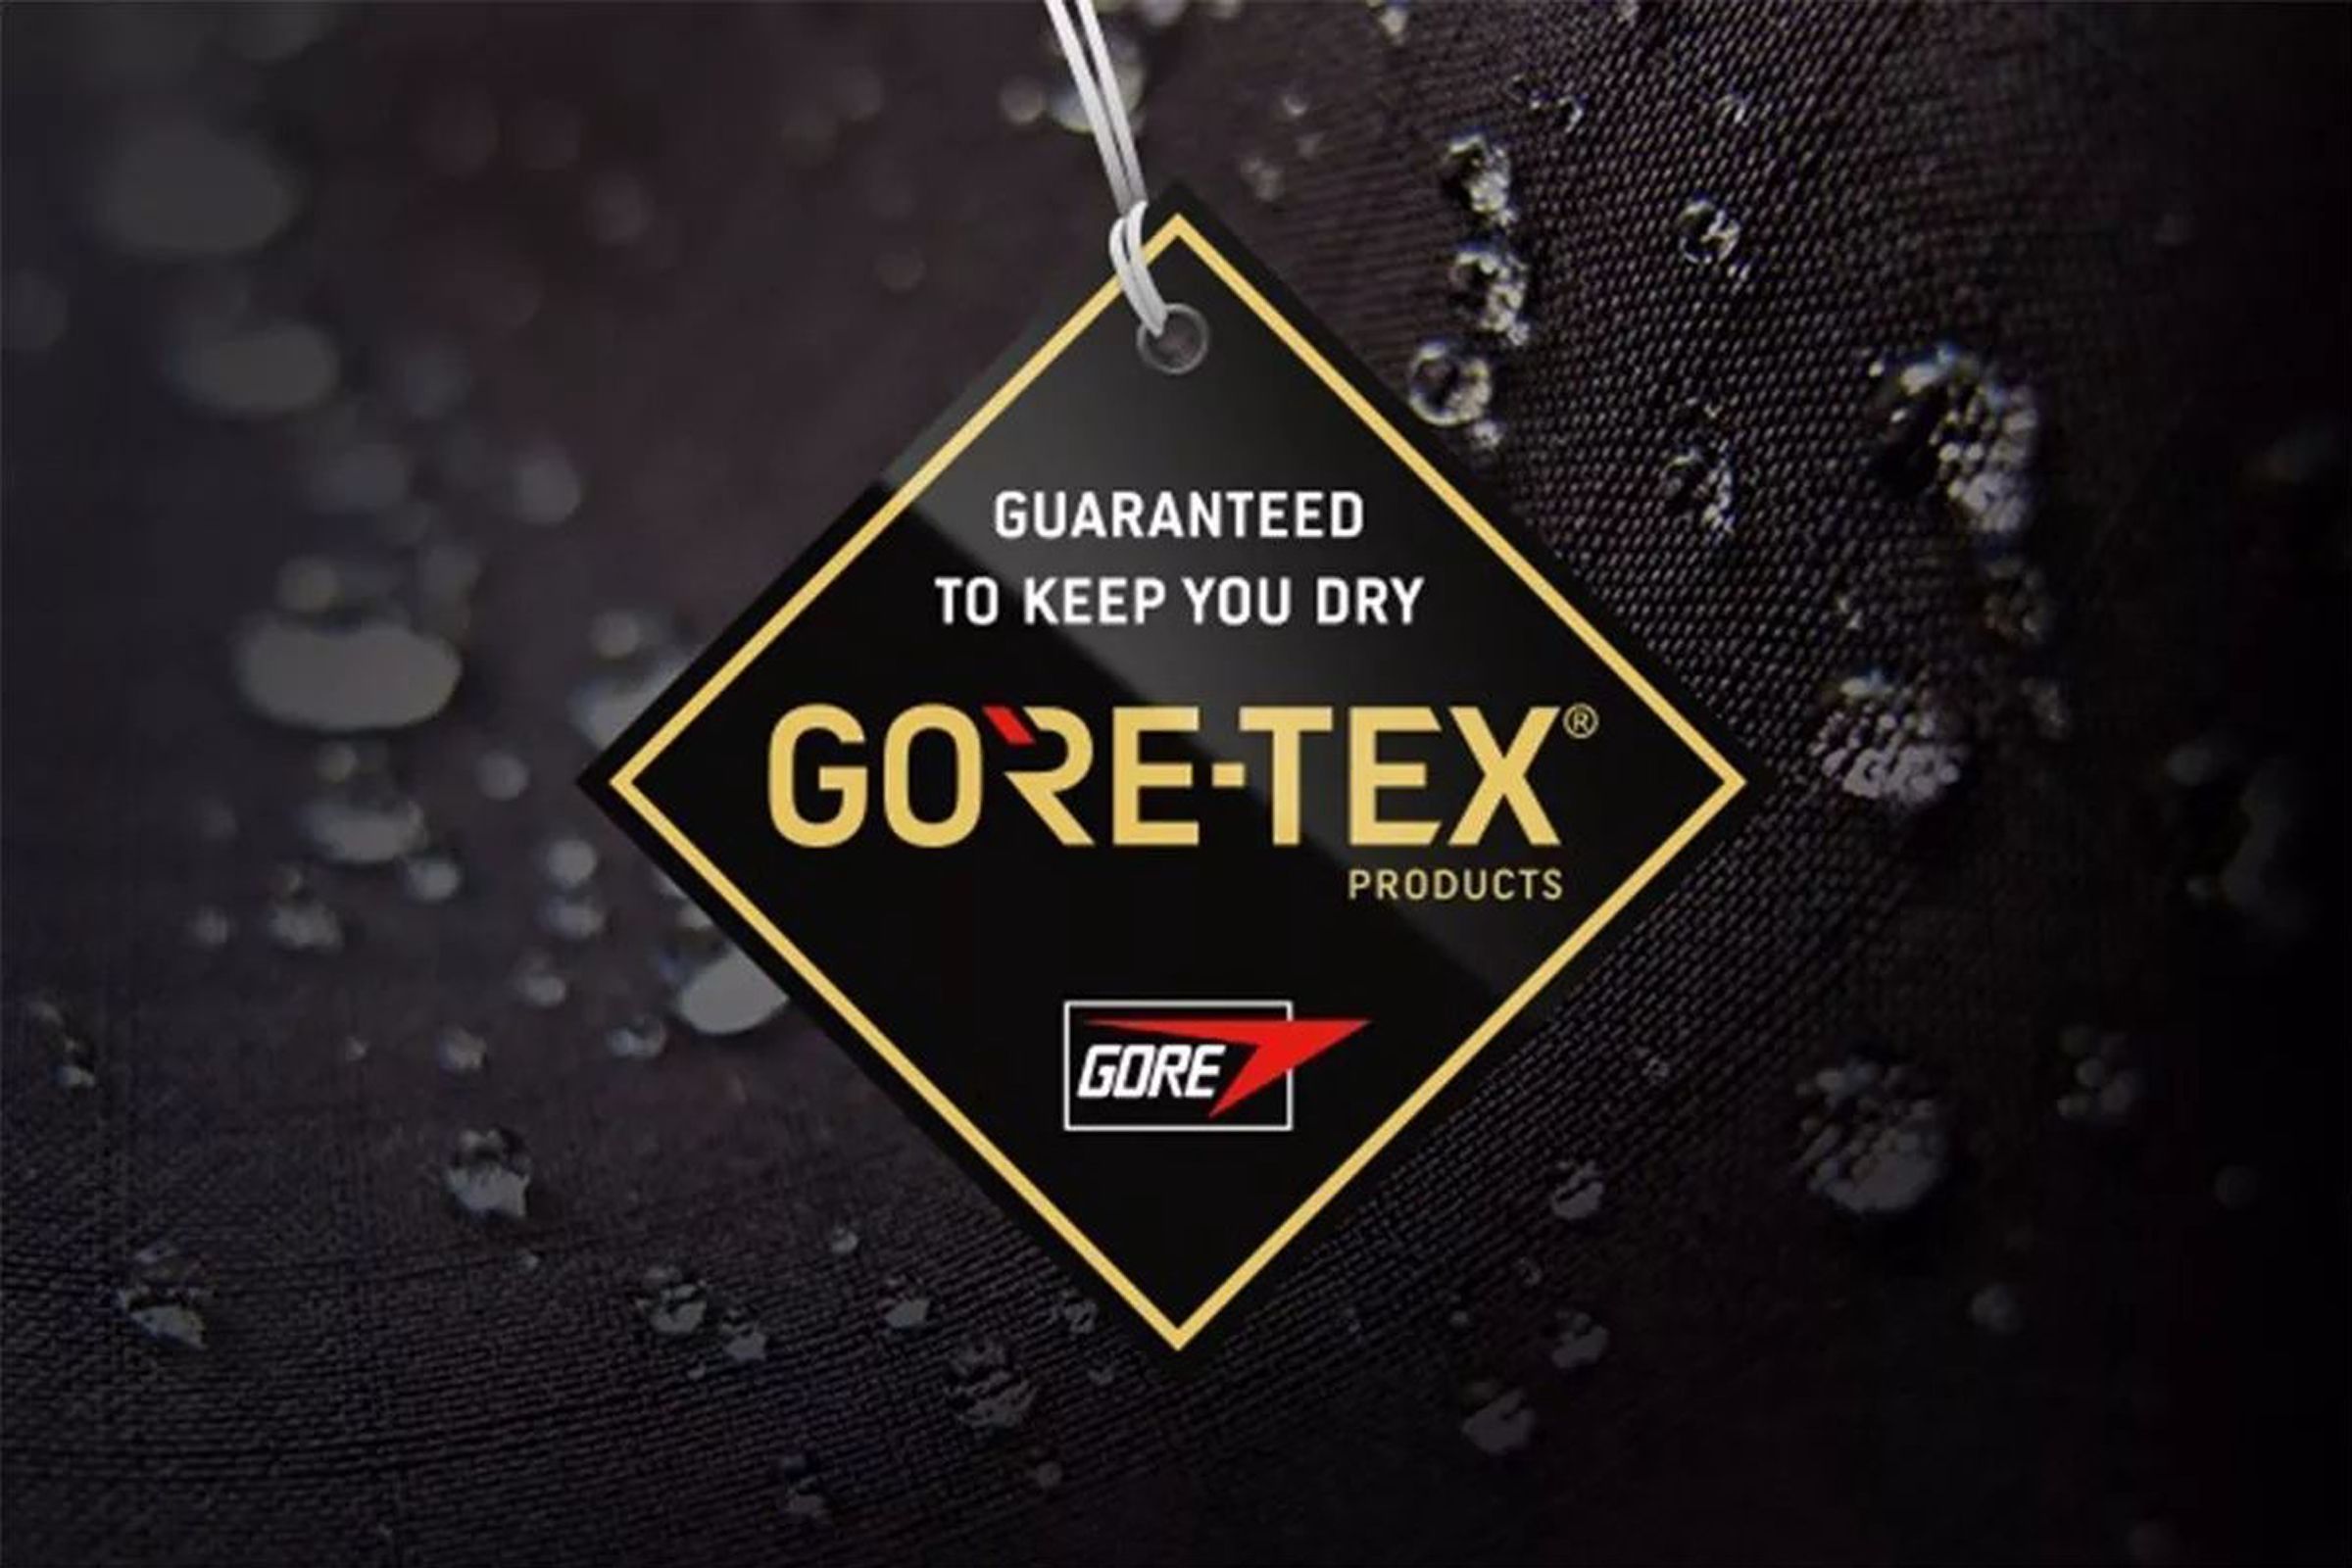 "Guaranteed to Keep You Dry": A Brief Look at GORE-TEX